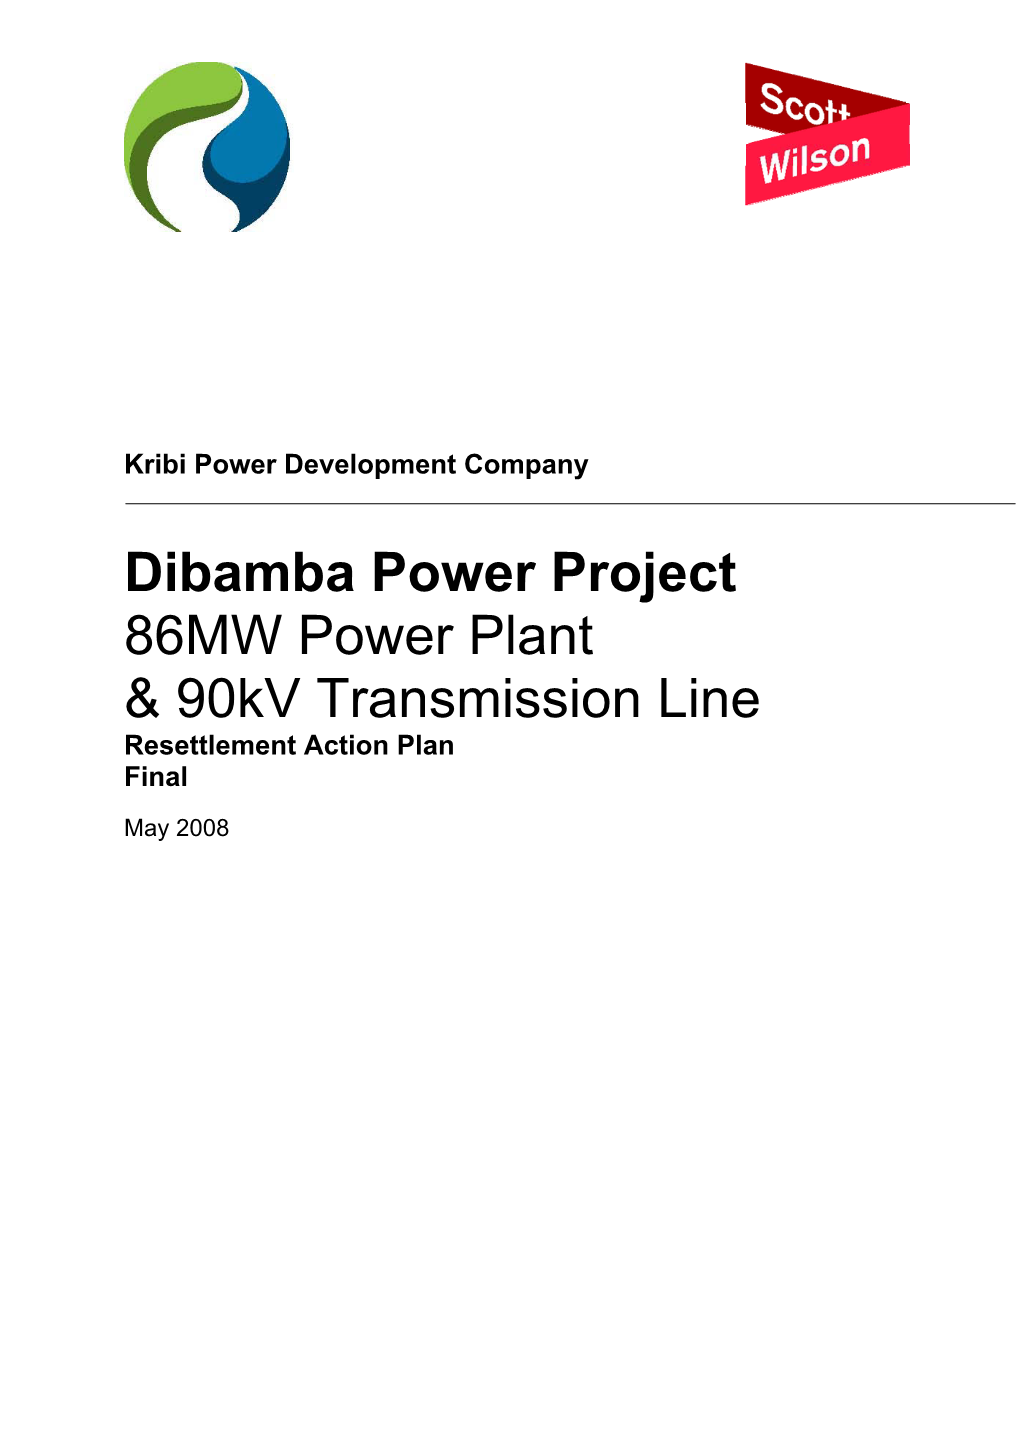 Dibamba Power Project 86MW Power Plant & 90Kv Transmission Line